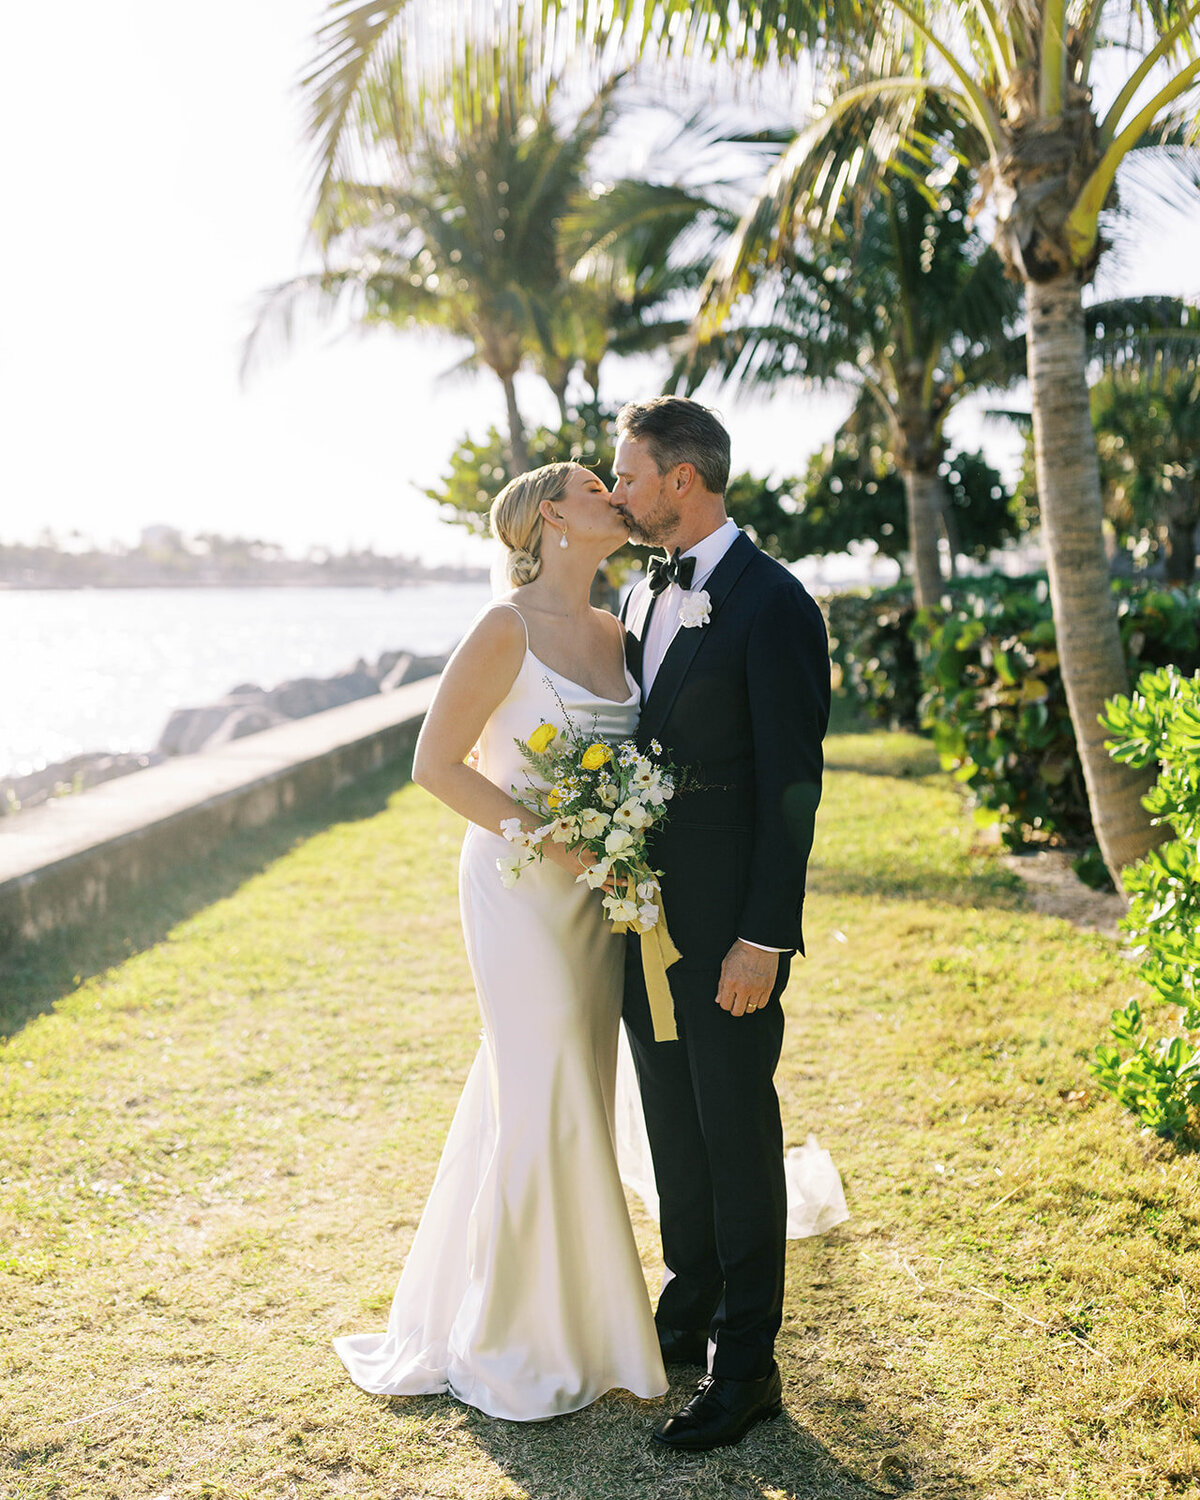 Tess & DB - previews - Chrissy O_Neill & Co. - South Florida Wedding Photographer-33